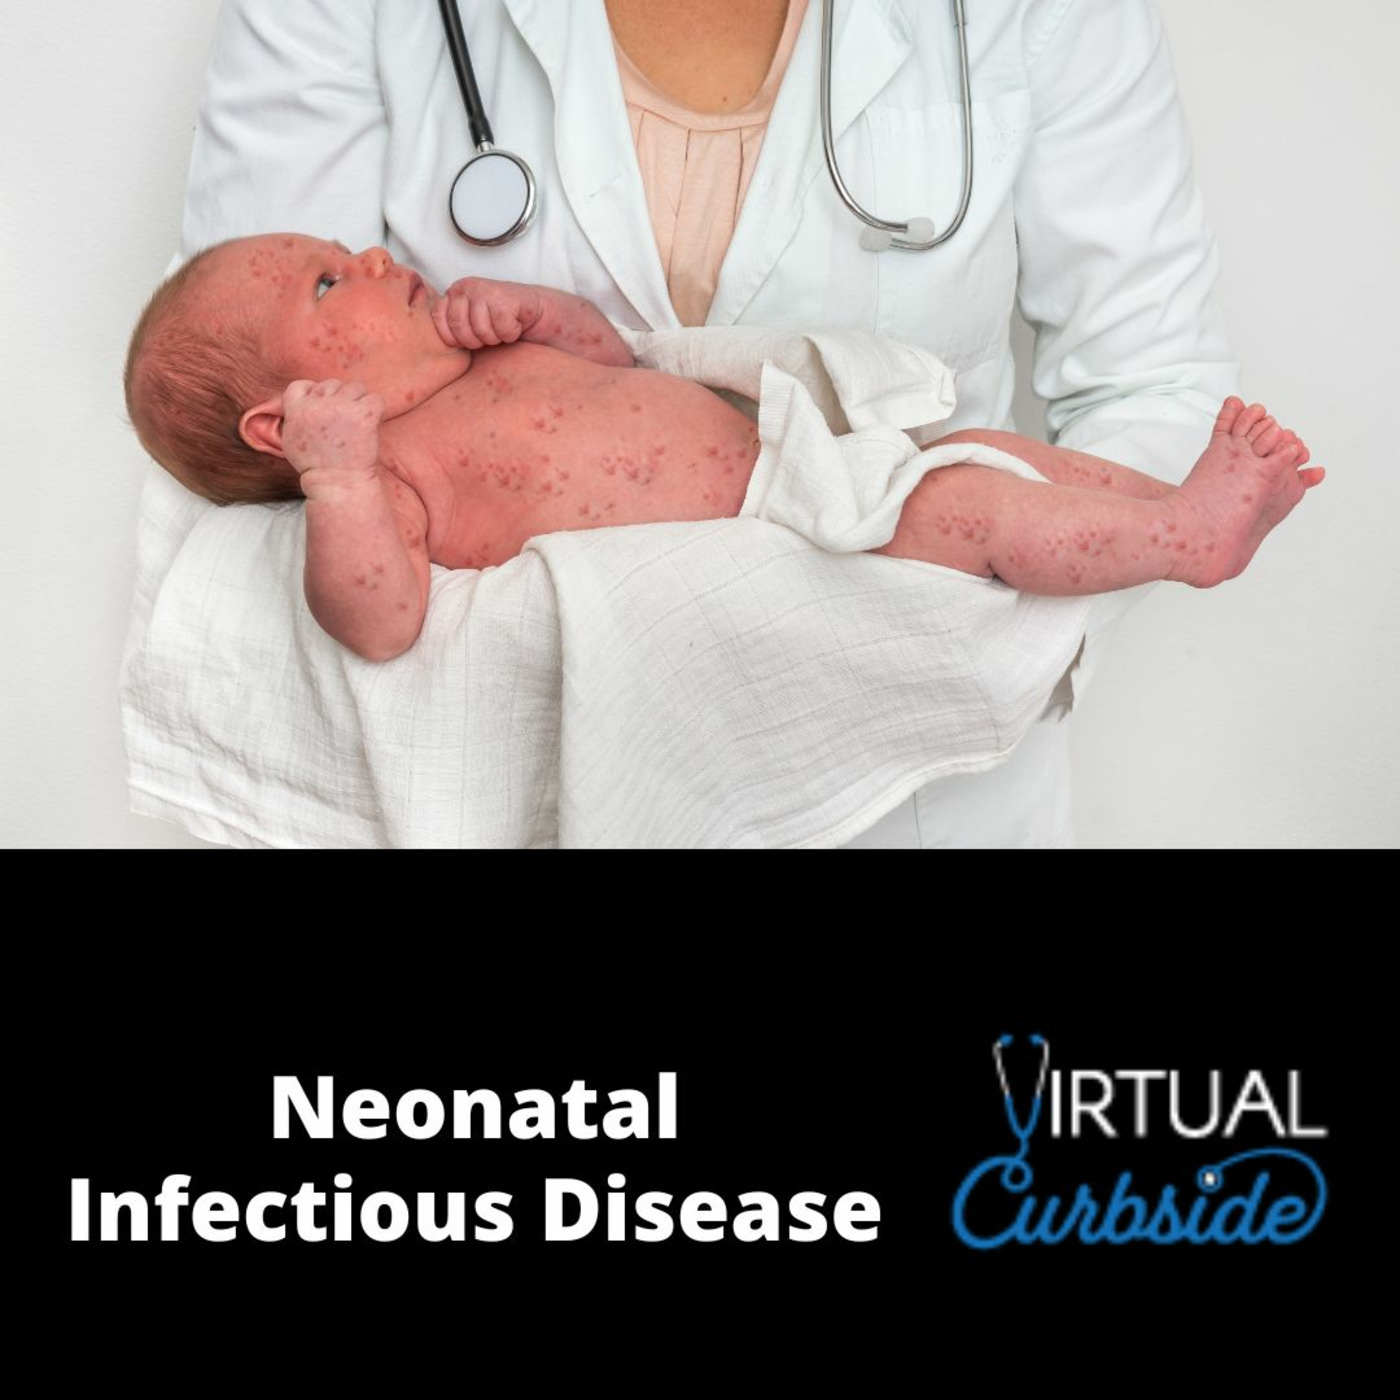 Episode 266: #62-2 Neonatal Infectious Disease: Treatment of Congenital Syphilis